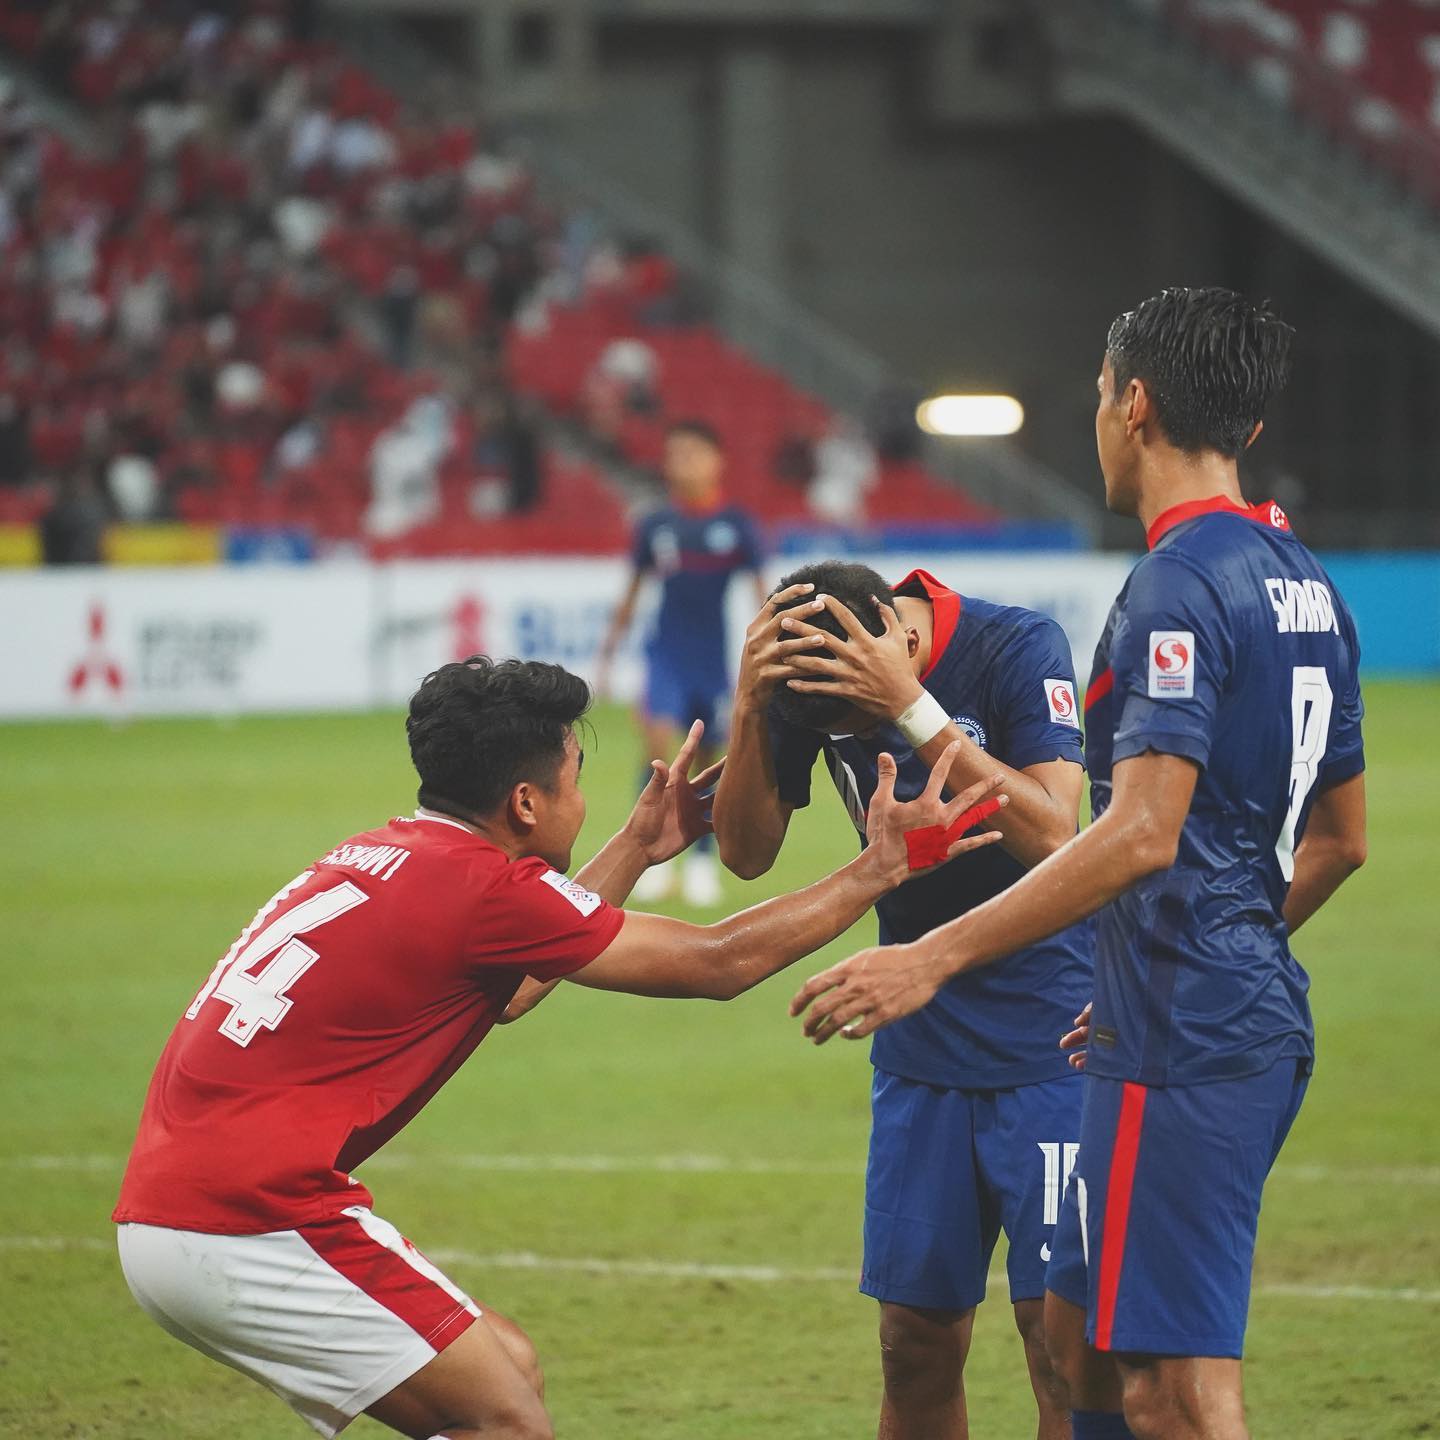 Asnawi Mangkualam Minta Maaf soal Insiden dengan Pemain Singapura di Piala AFF 2020